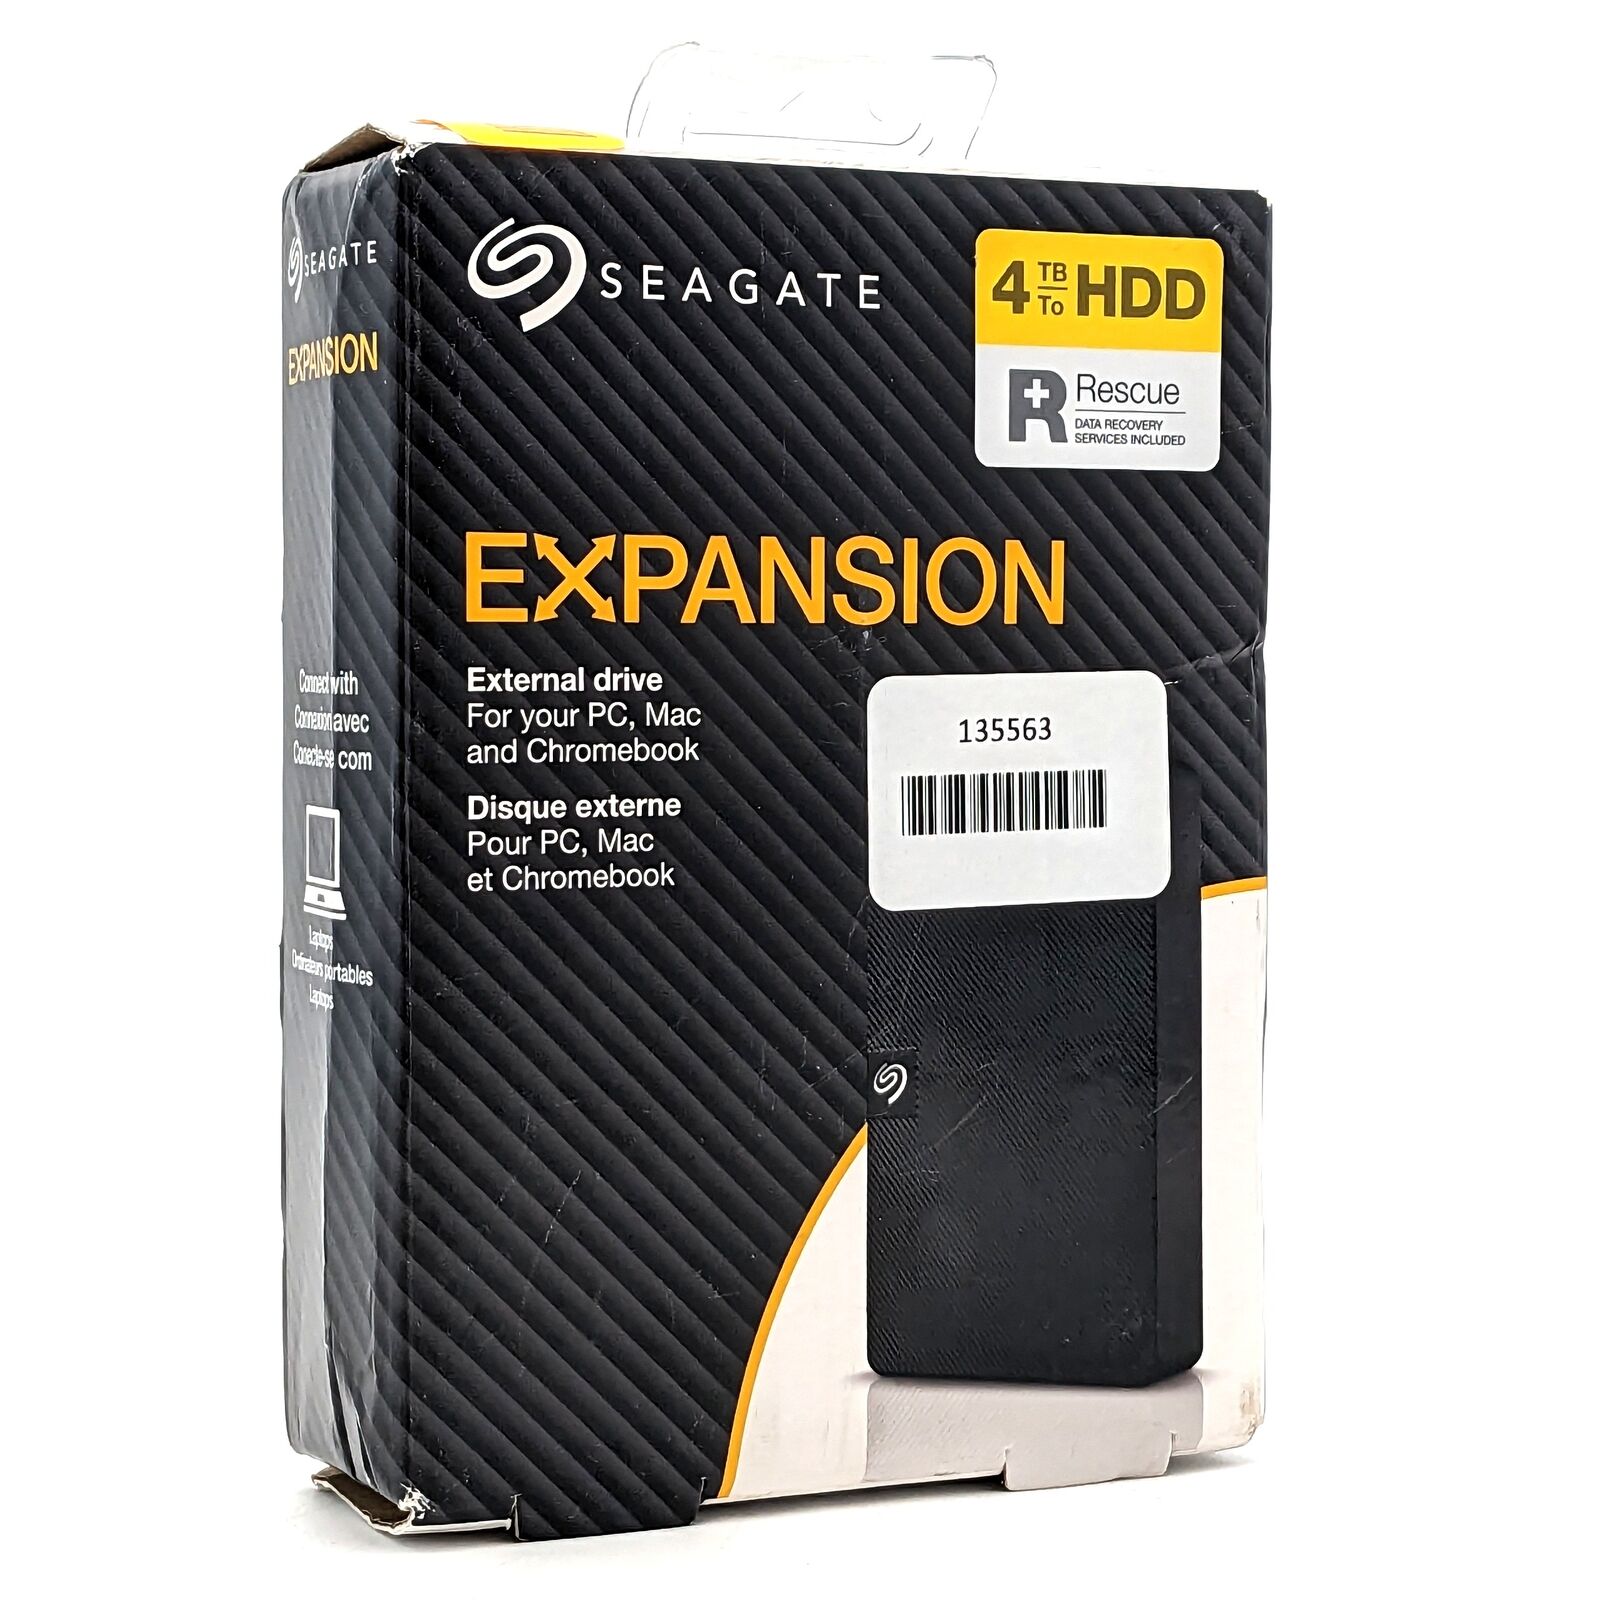 Seagate Expansion 4TB External Desktop HDD - Black